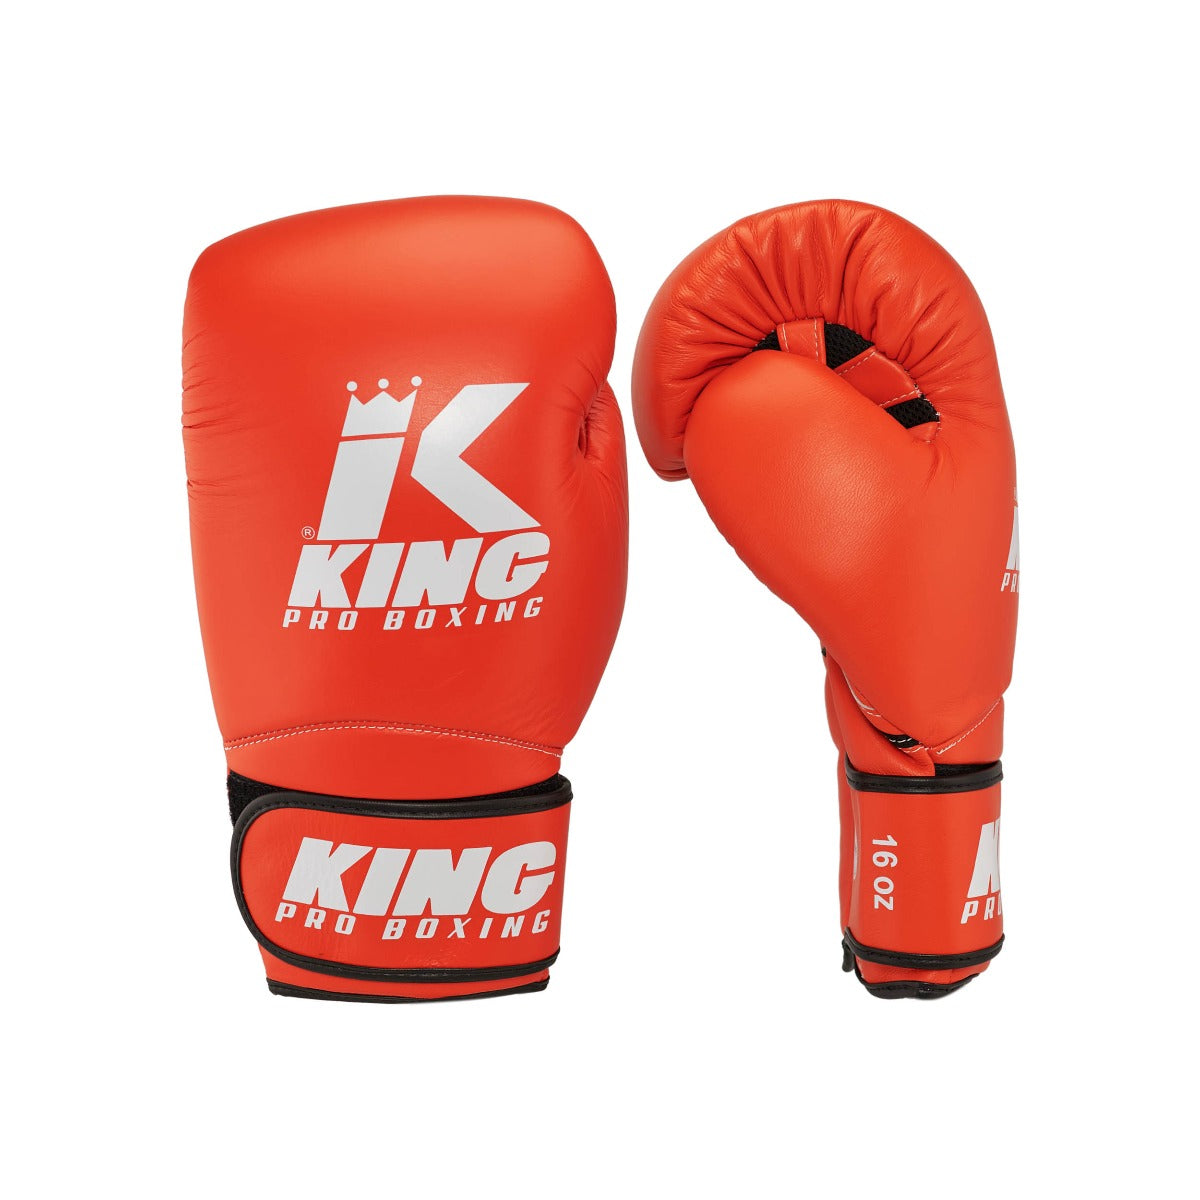 King PRO boxing boxing gloves - STAR MESH 6